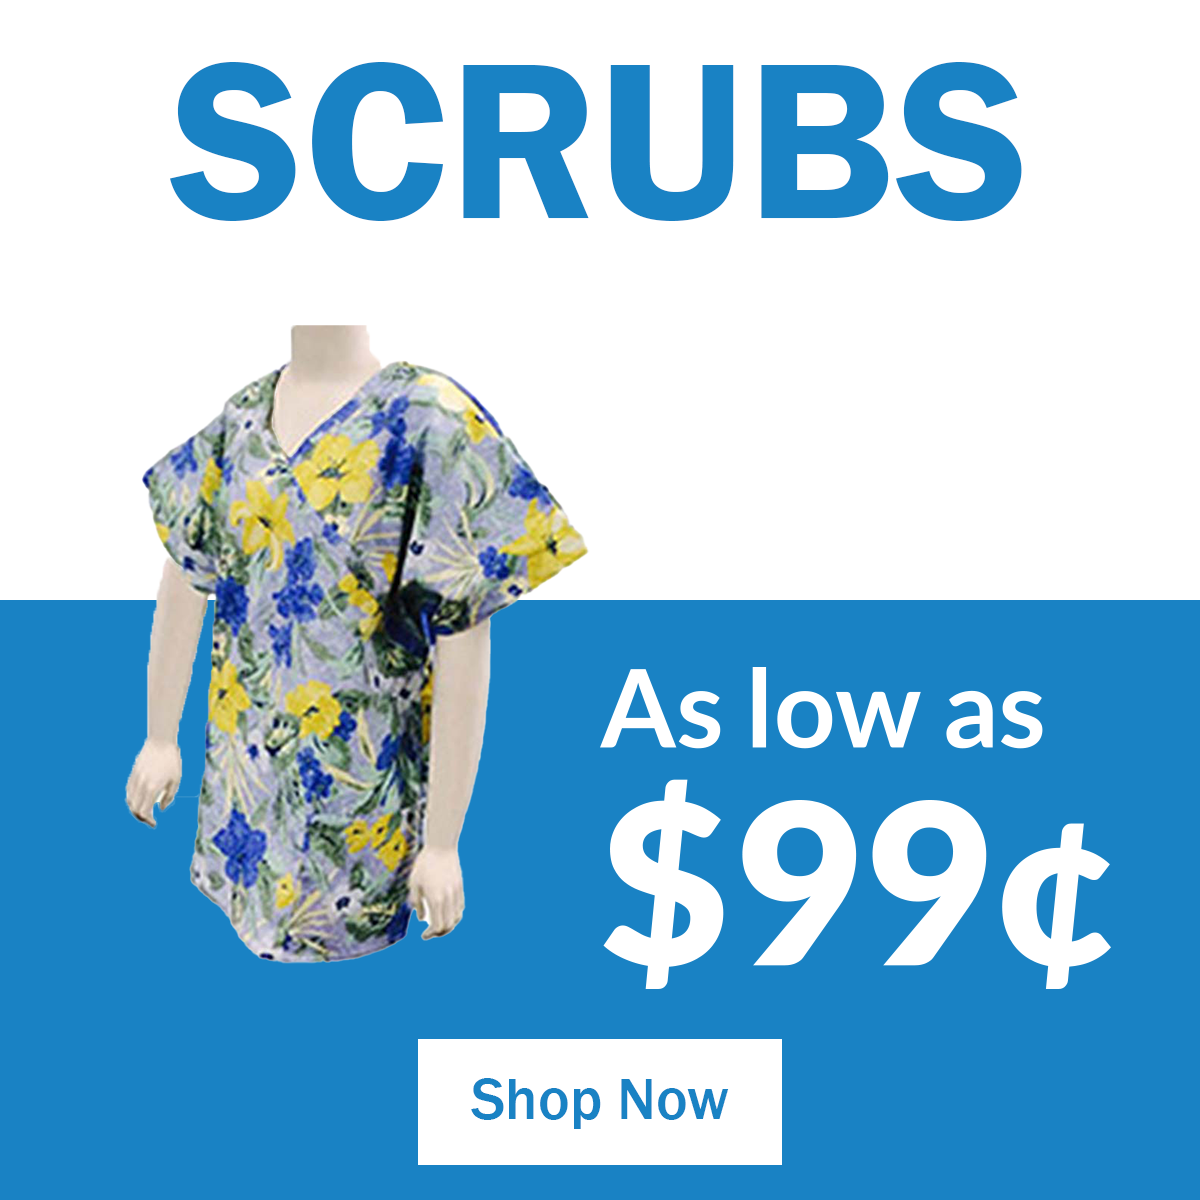 Scrubs as low as 99¢